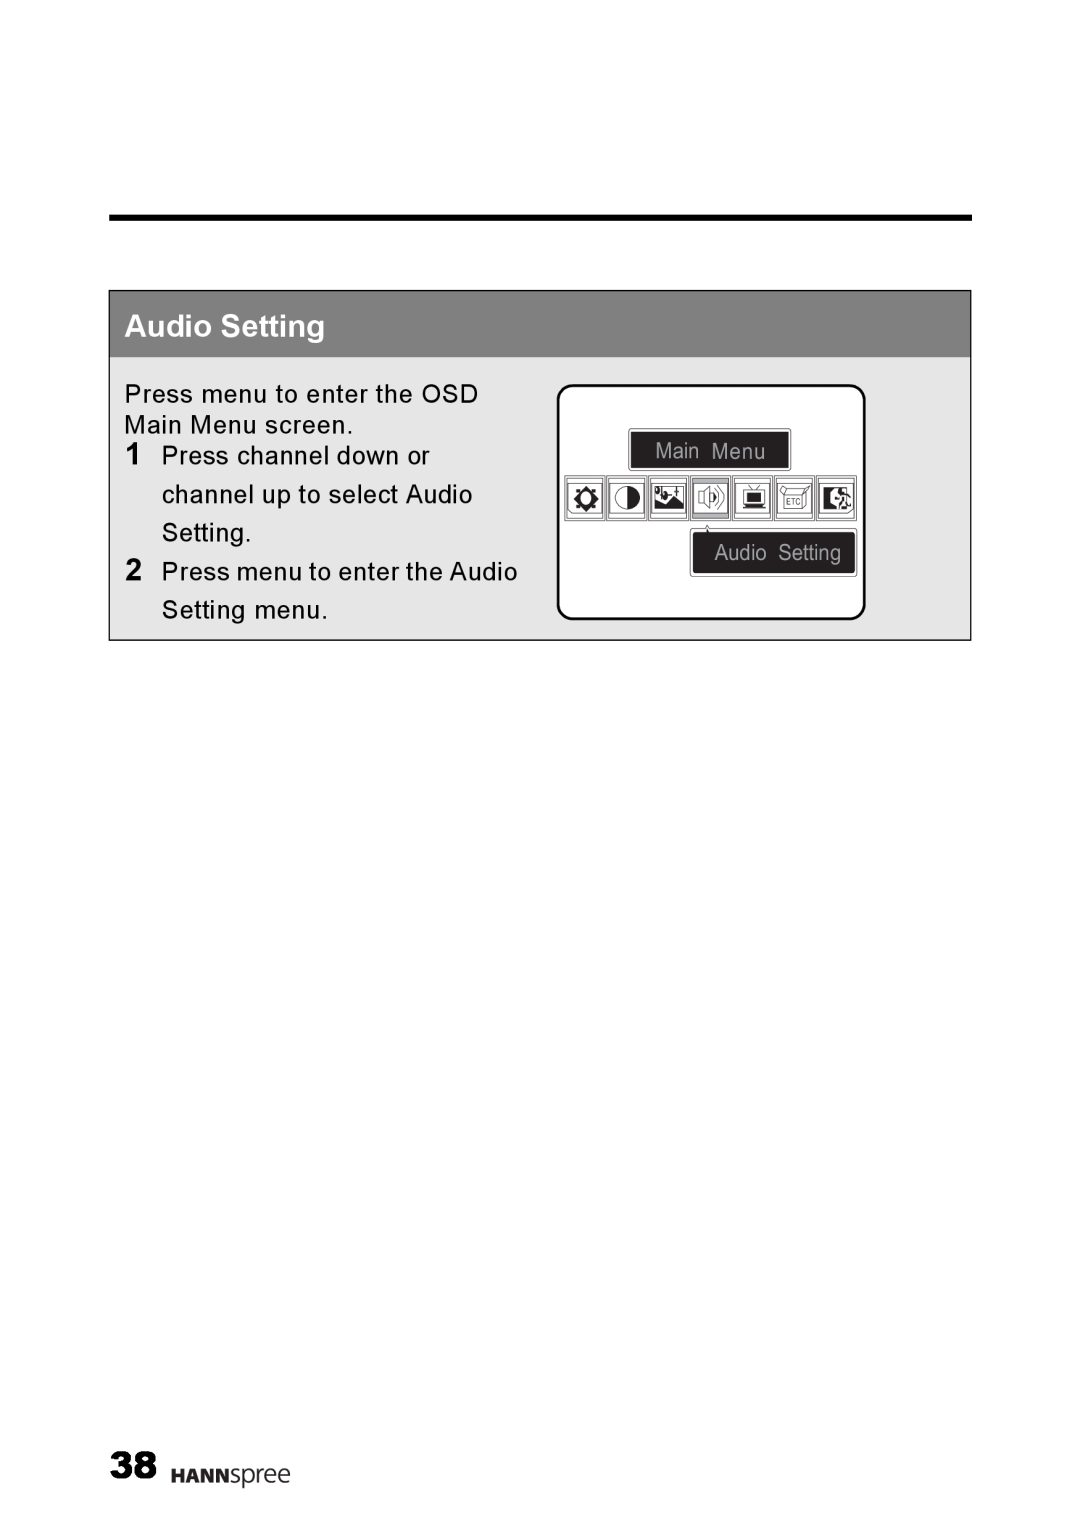 HANNspree LT02-12U1-000 user manual Audio Setting, Press menu to enter the OSD Main Menu screen 